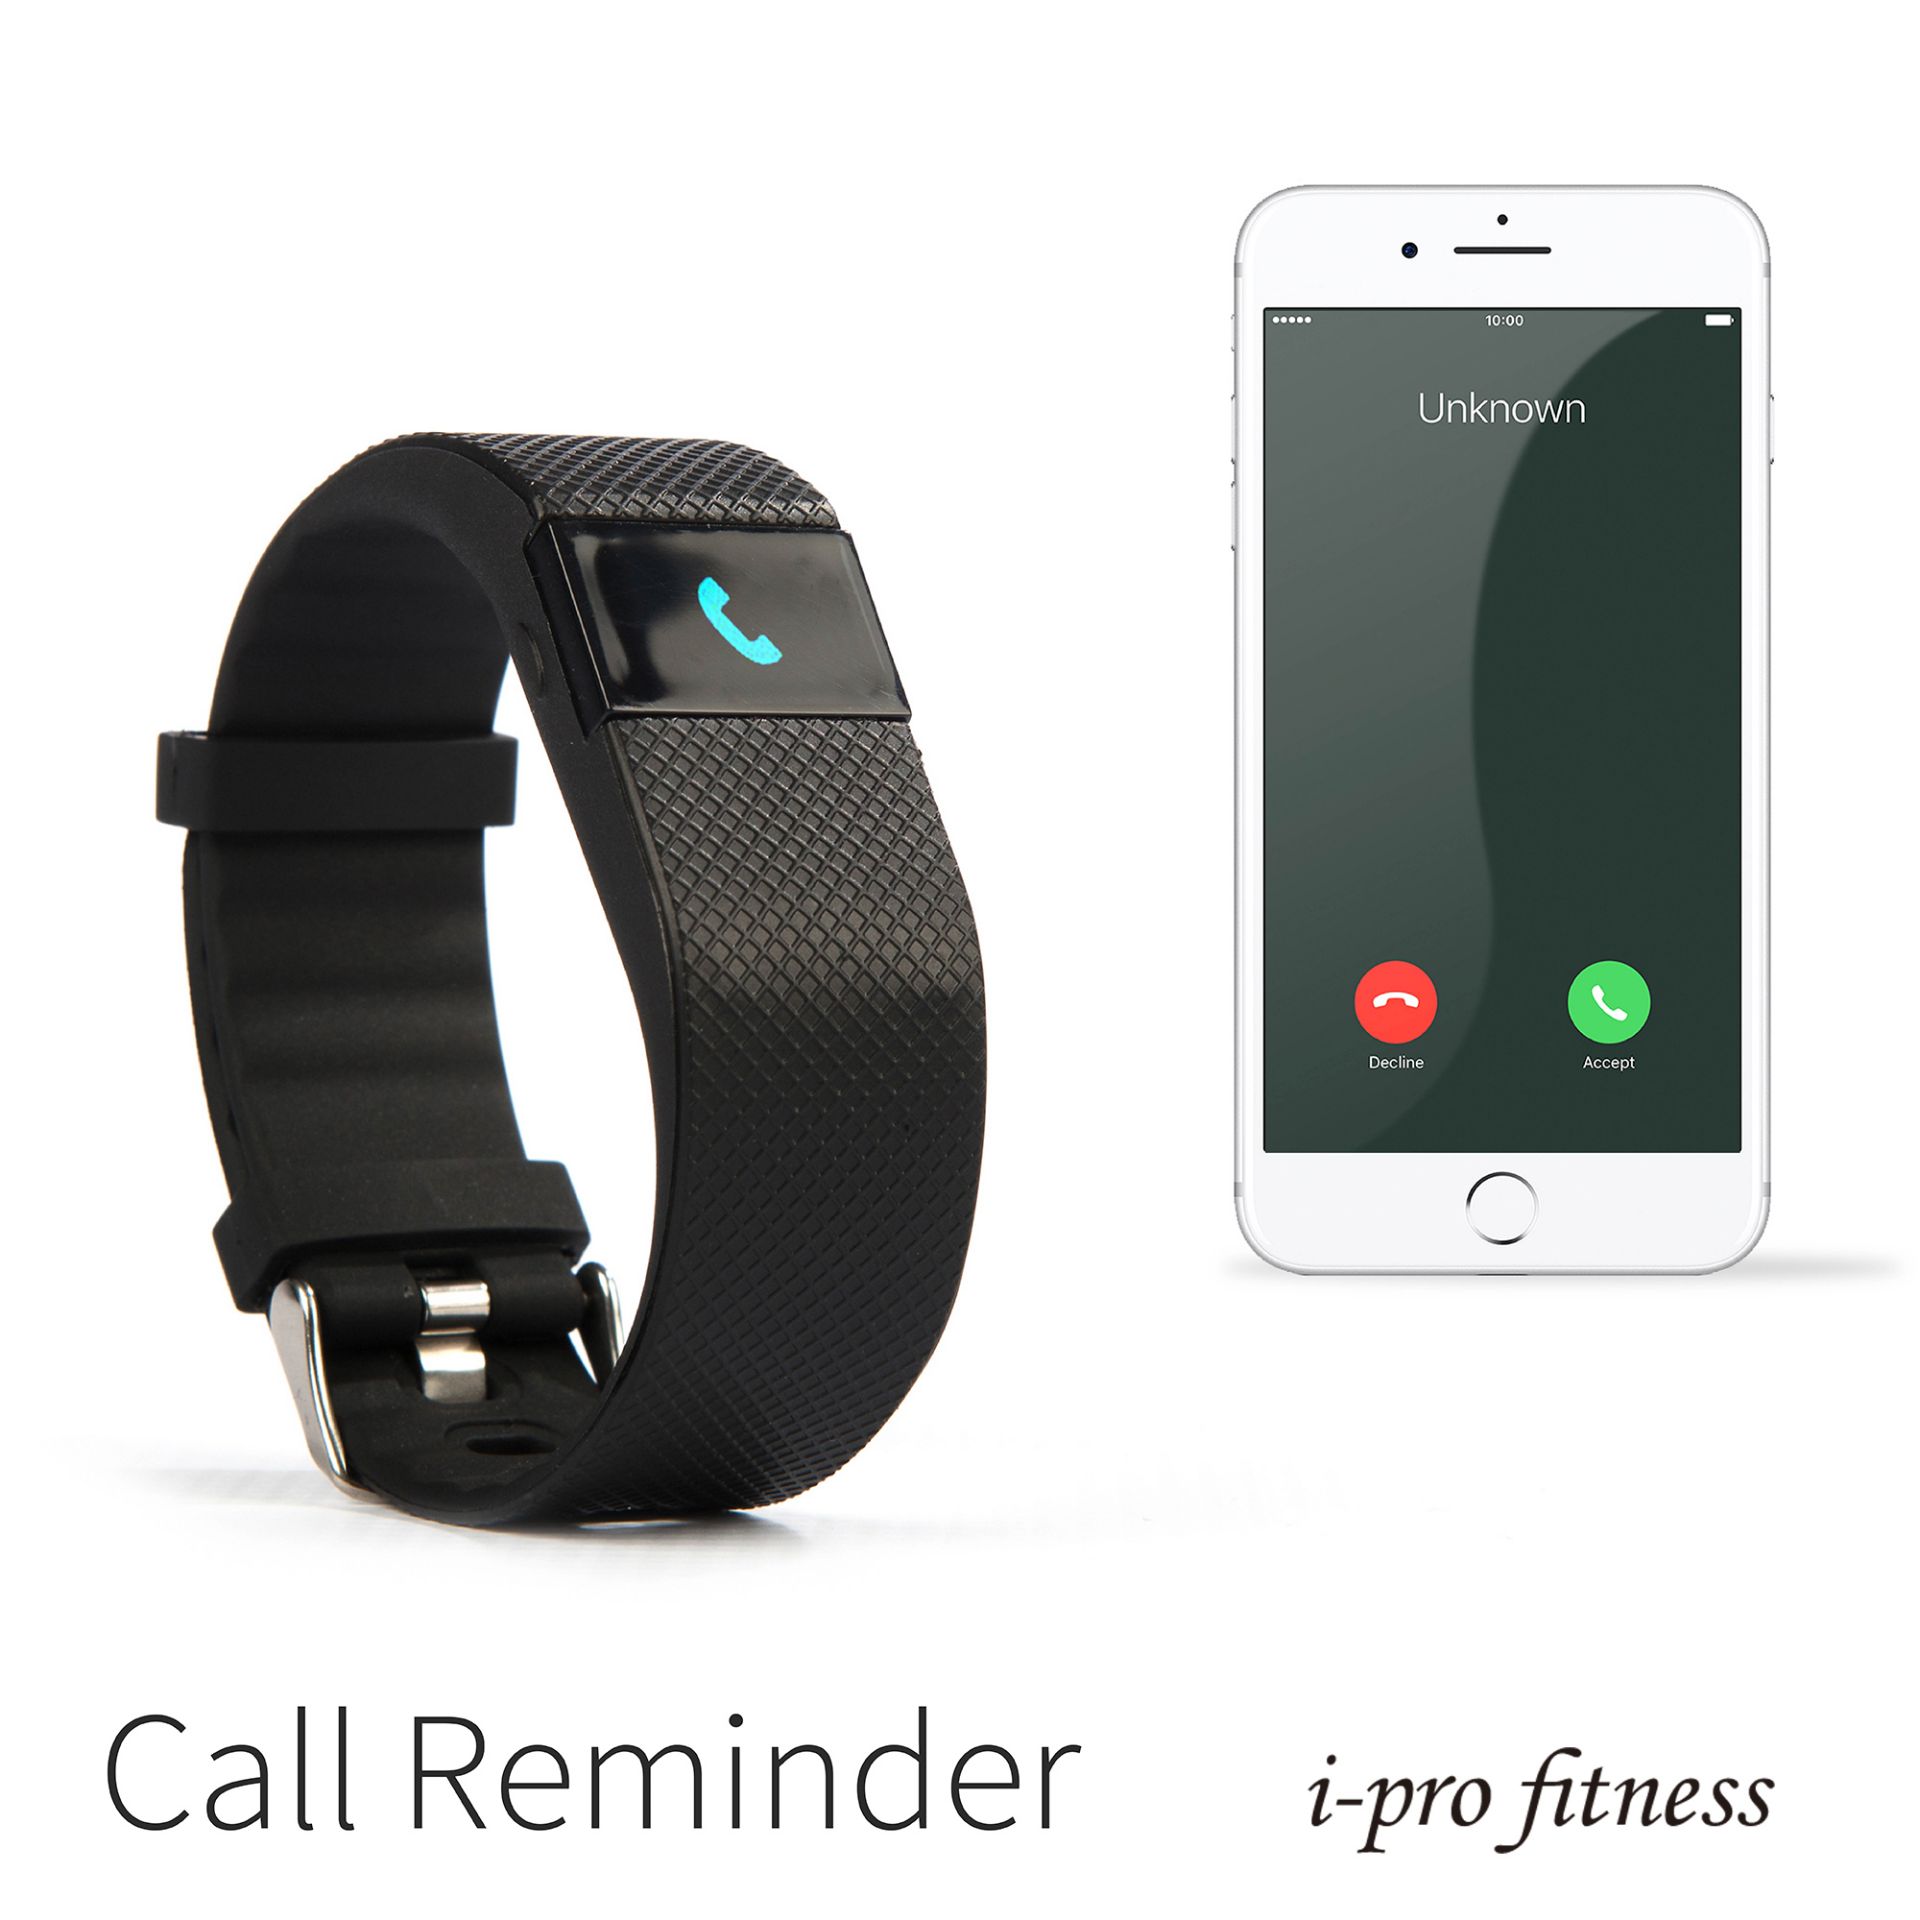 20x Fitness Tracker i-pro fitness, Bluetooth 4.0 Sports Smart Bracelet. - Image 2 of 8